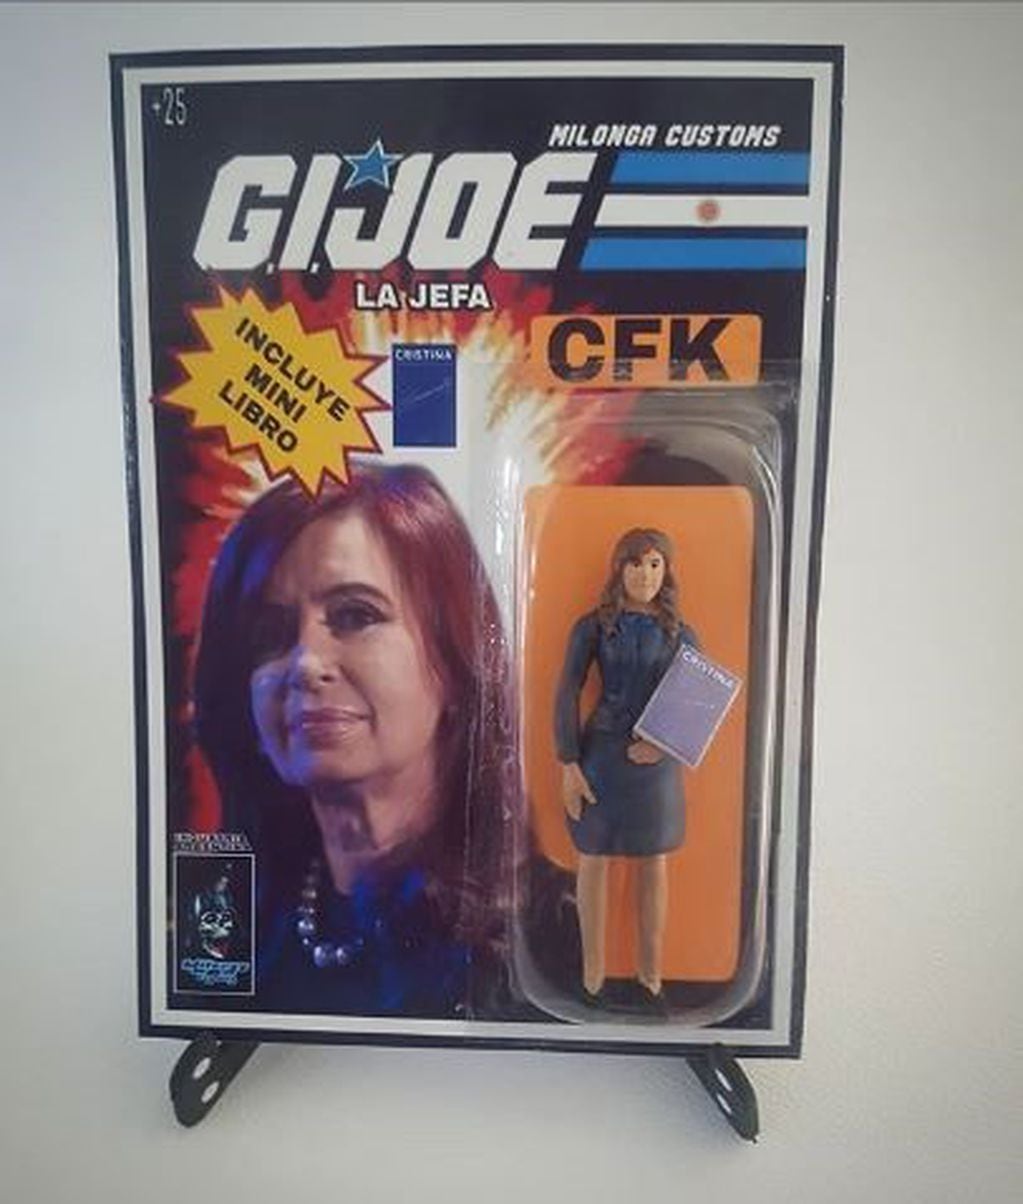 Un grupo de artistas diseñó una muñeca de Cristina Kirchner y la vende en Instagram. (Instagram/ milongacustoms)